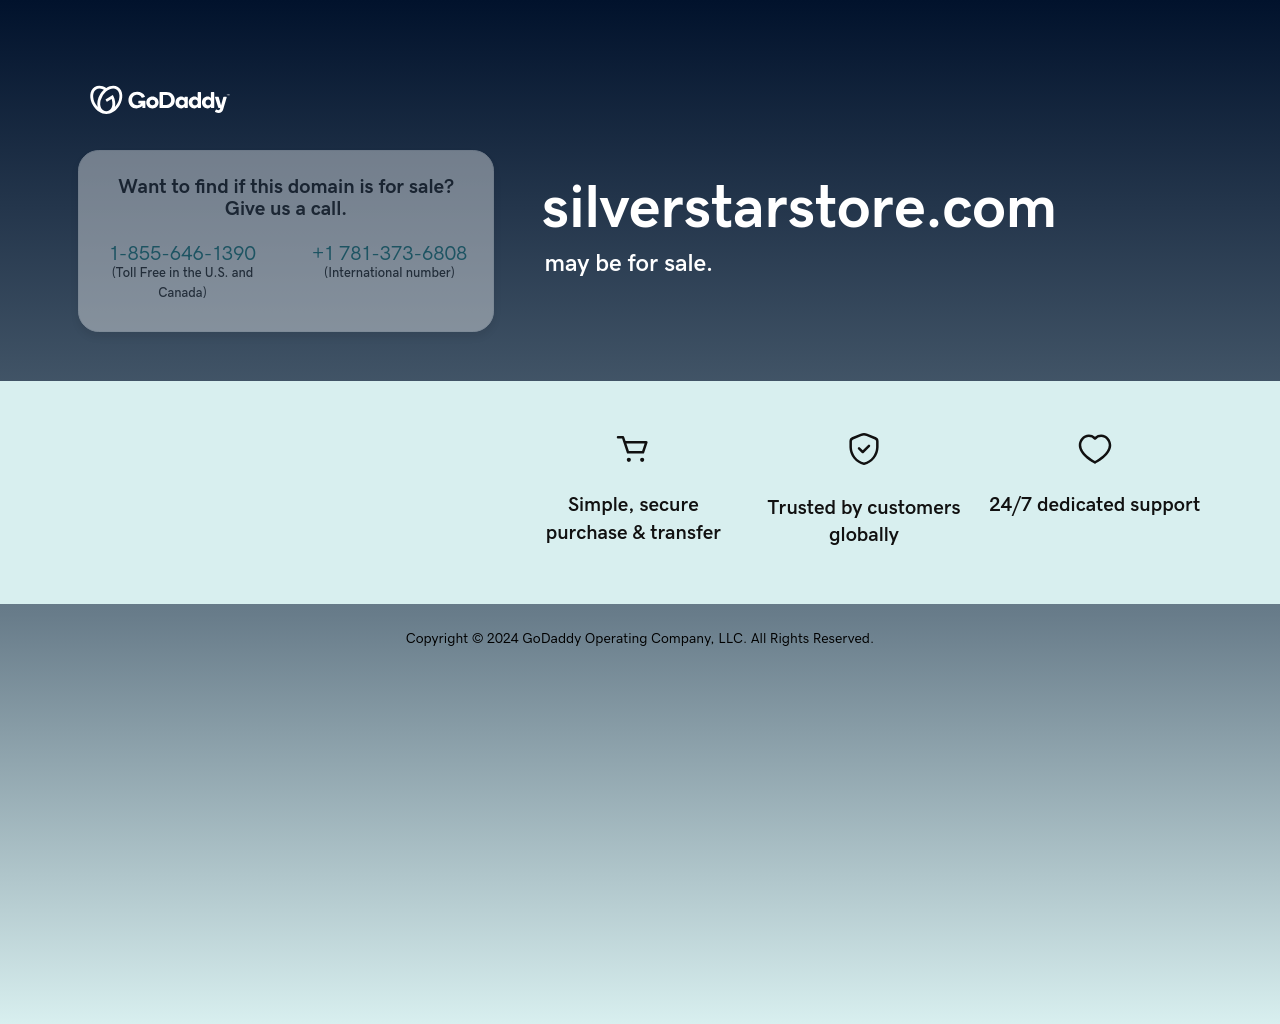 silverstarstore.com